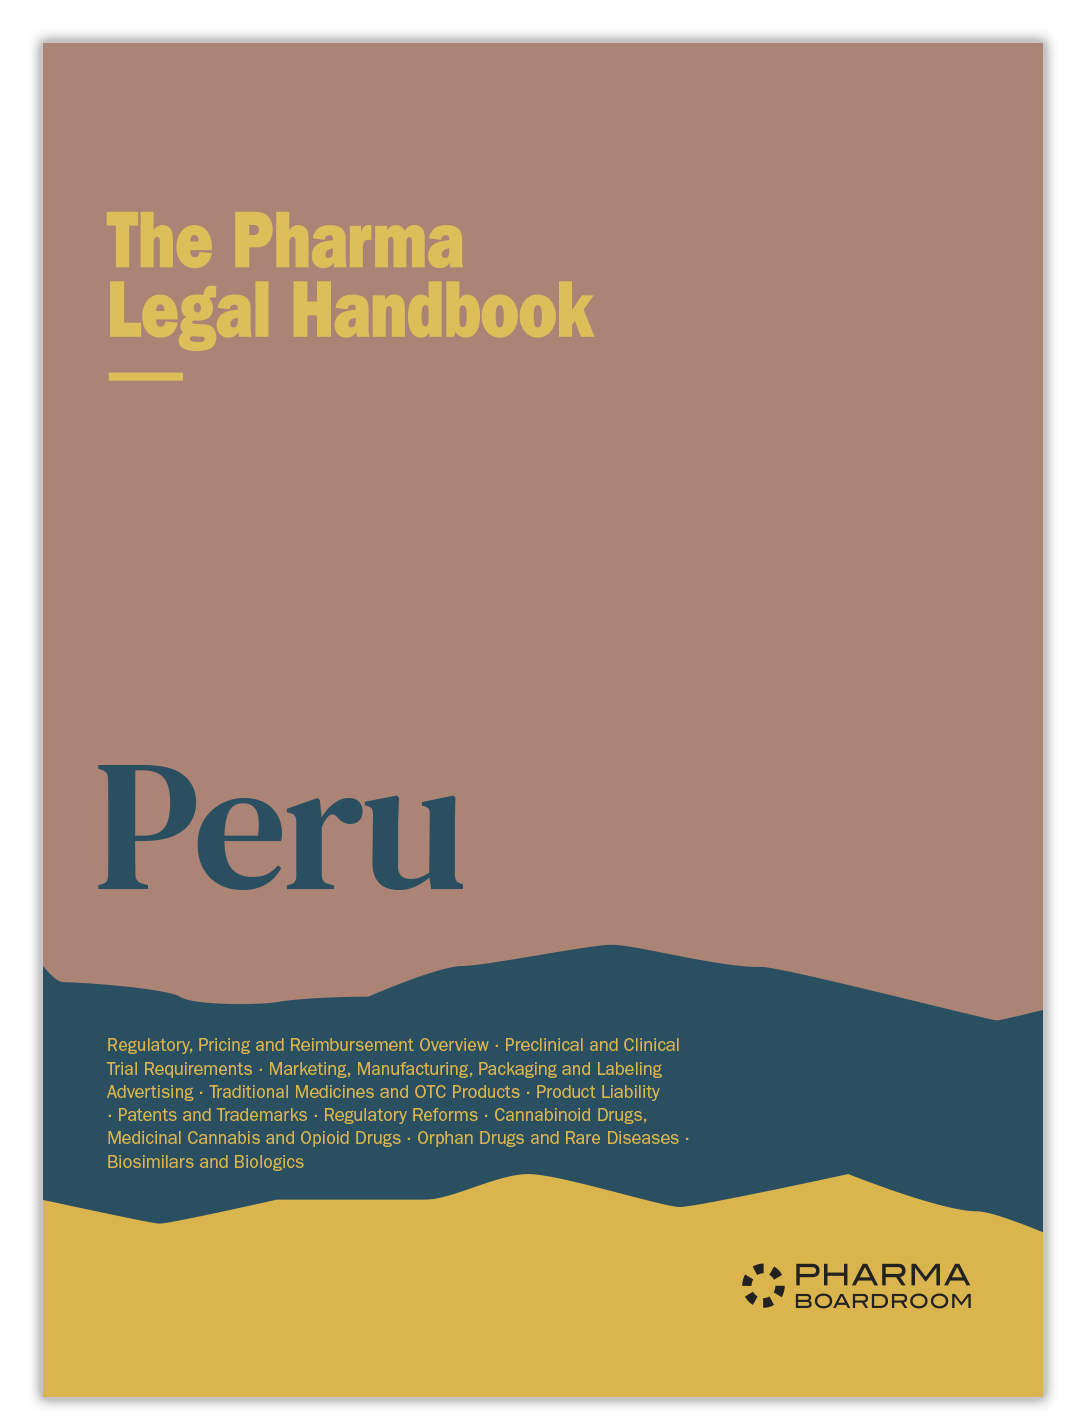 The Pharma Legal Handbook: Peru